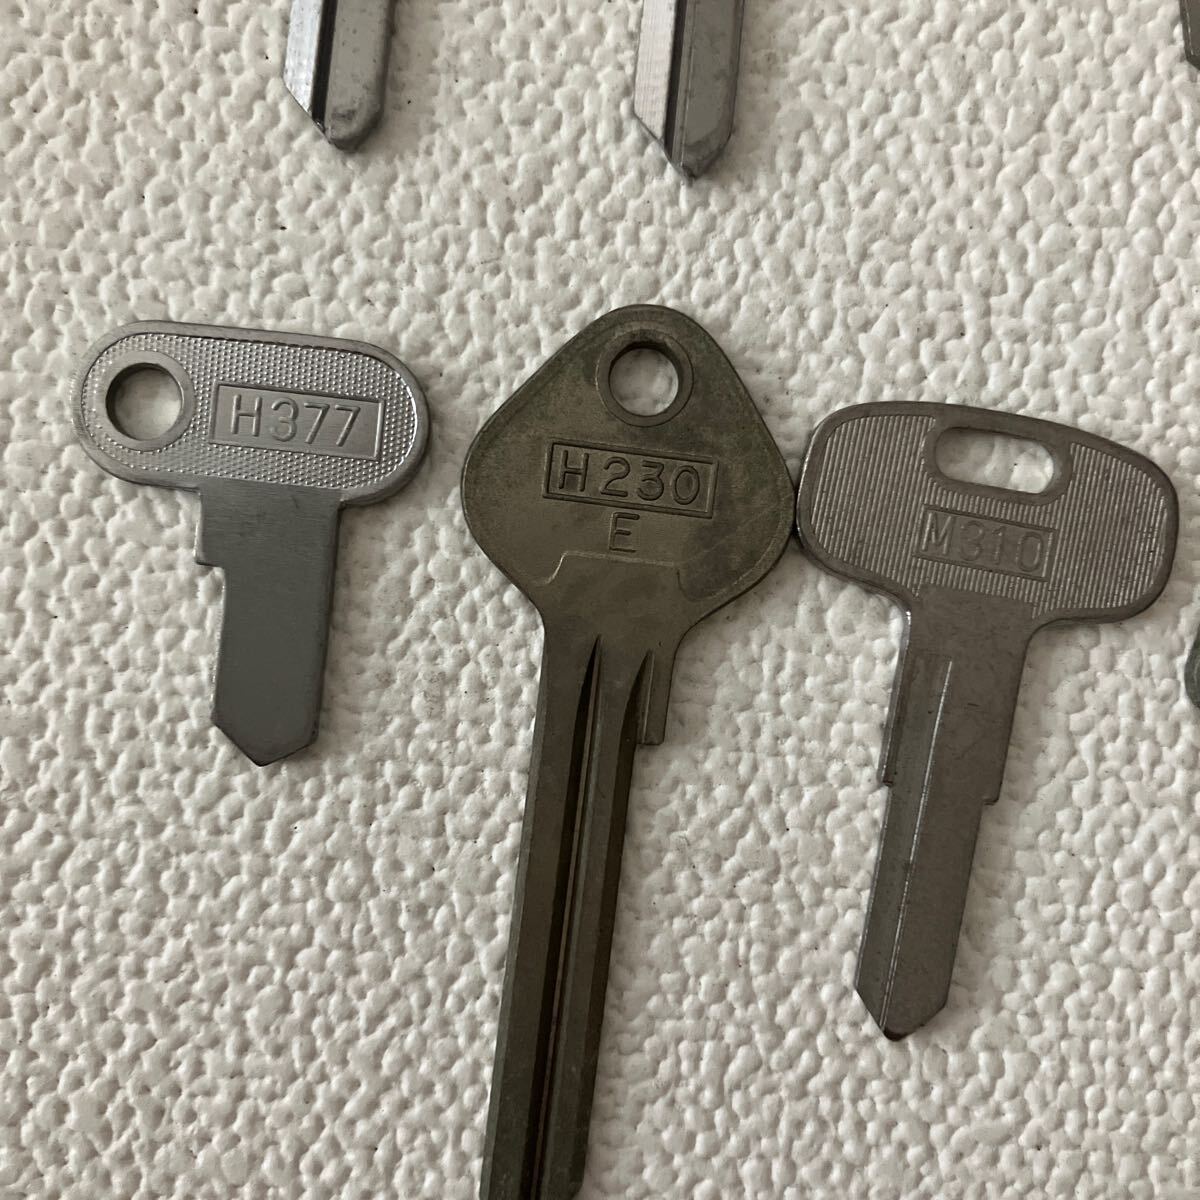 c306-10 60 未使用品 鍵 カギ まとめて 大量セット 合鍵 ブランクキー 加工 材料 カット 持込み コピーキー クローバー H番 M番 FUKI H230